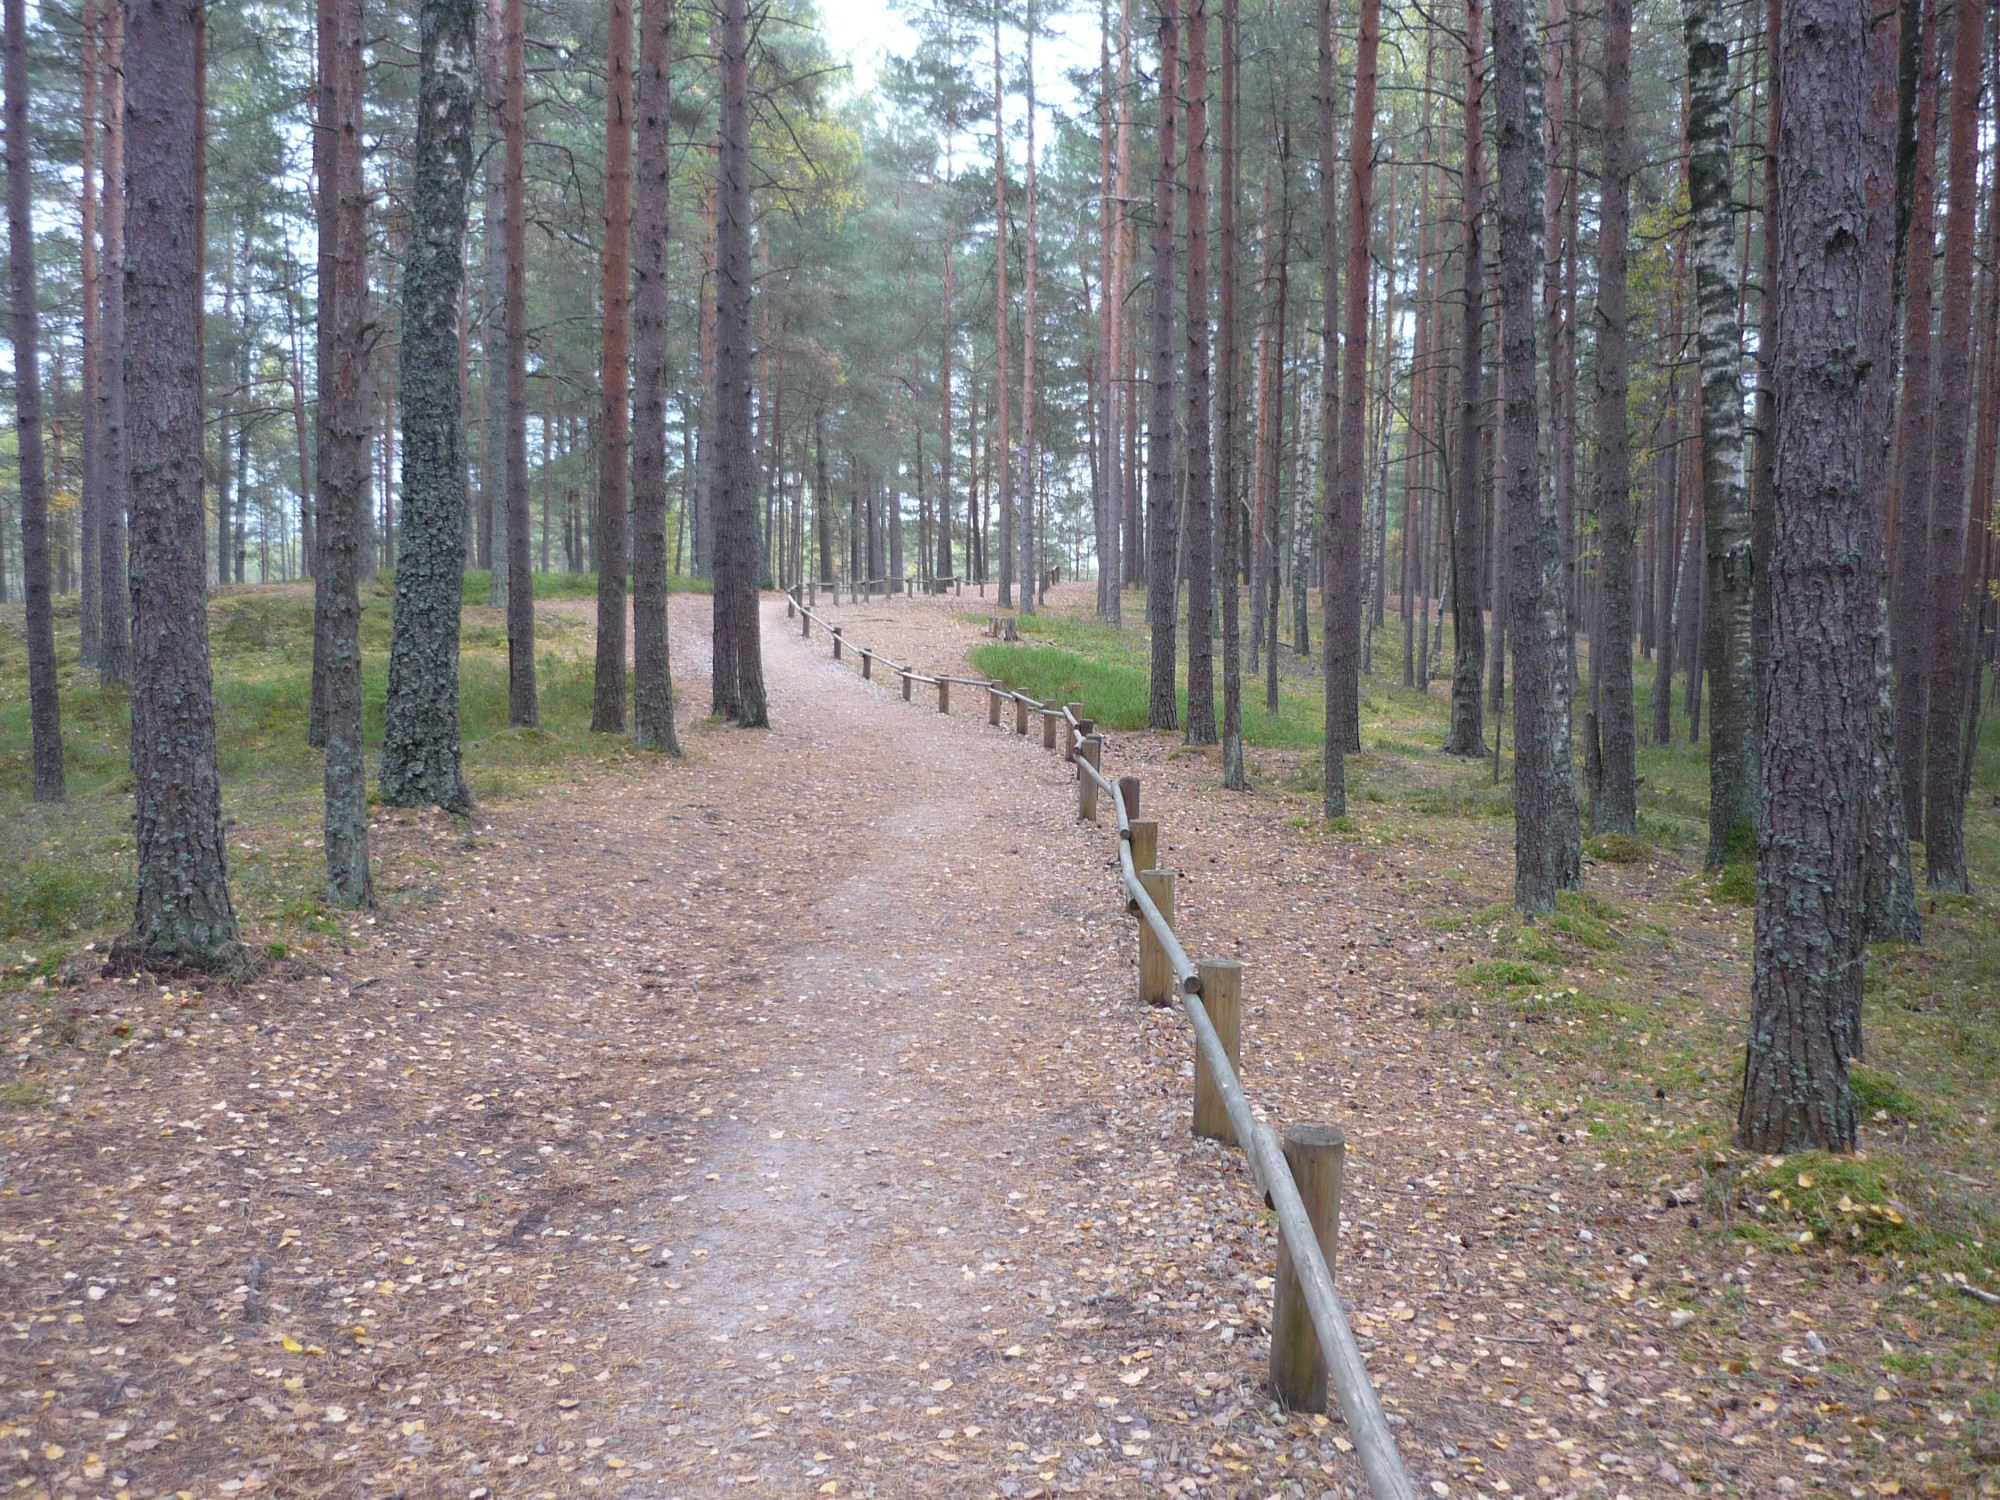 Ķemeri National Park, Latvia